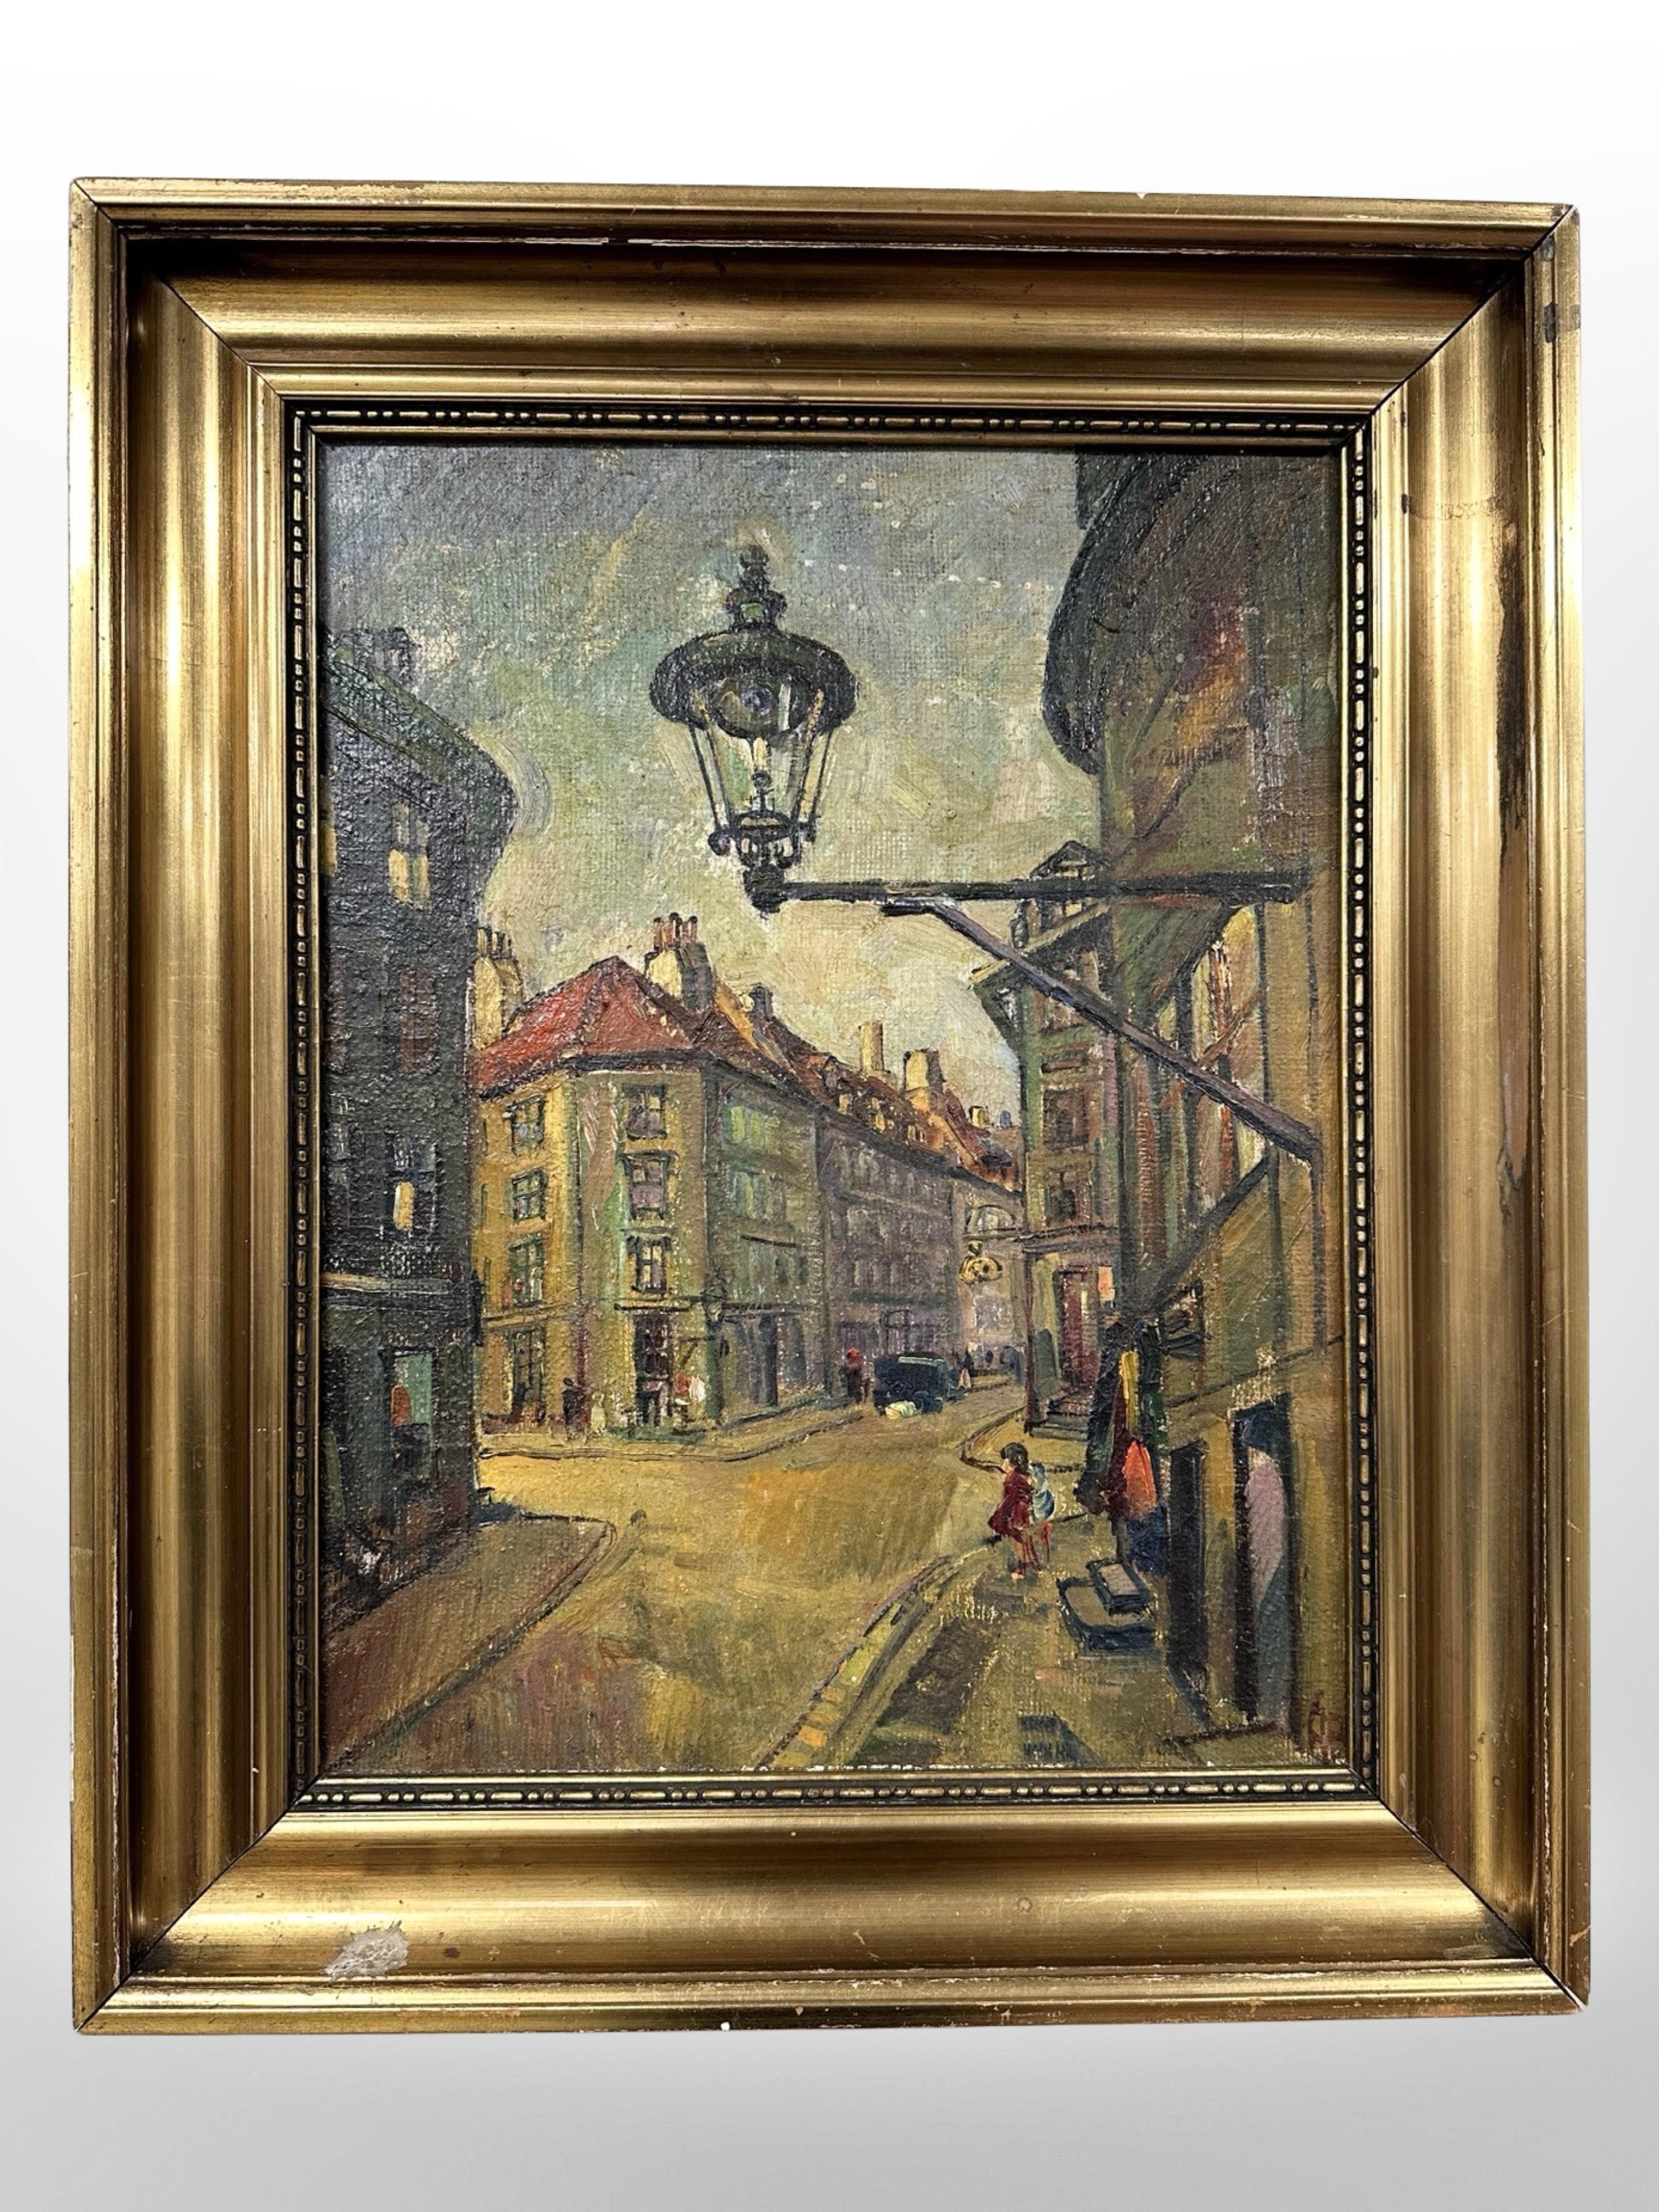 Danish school : Figures at a crossroads, oil on canvas, 34cm x 44cm.